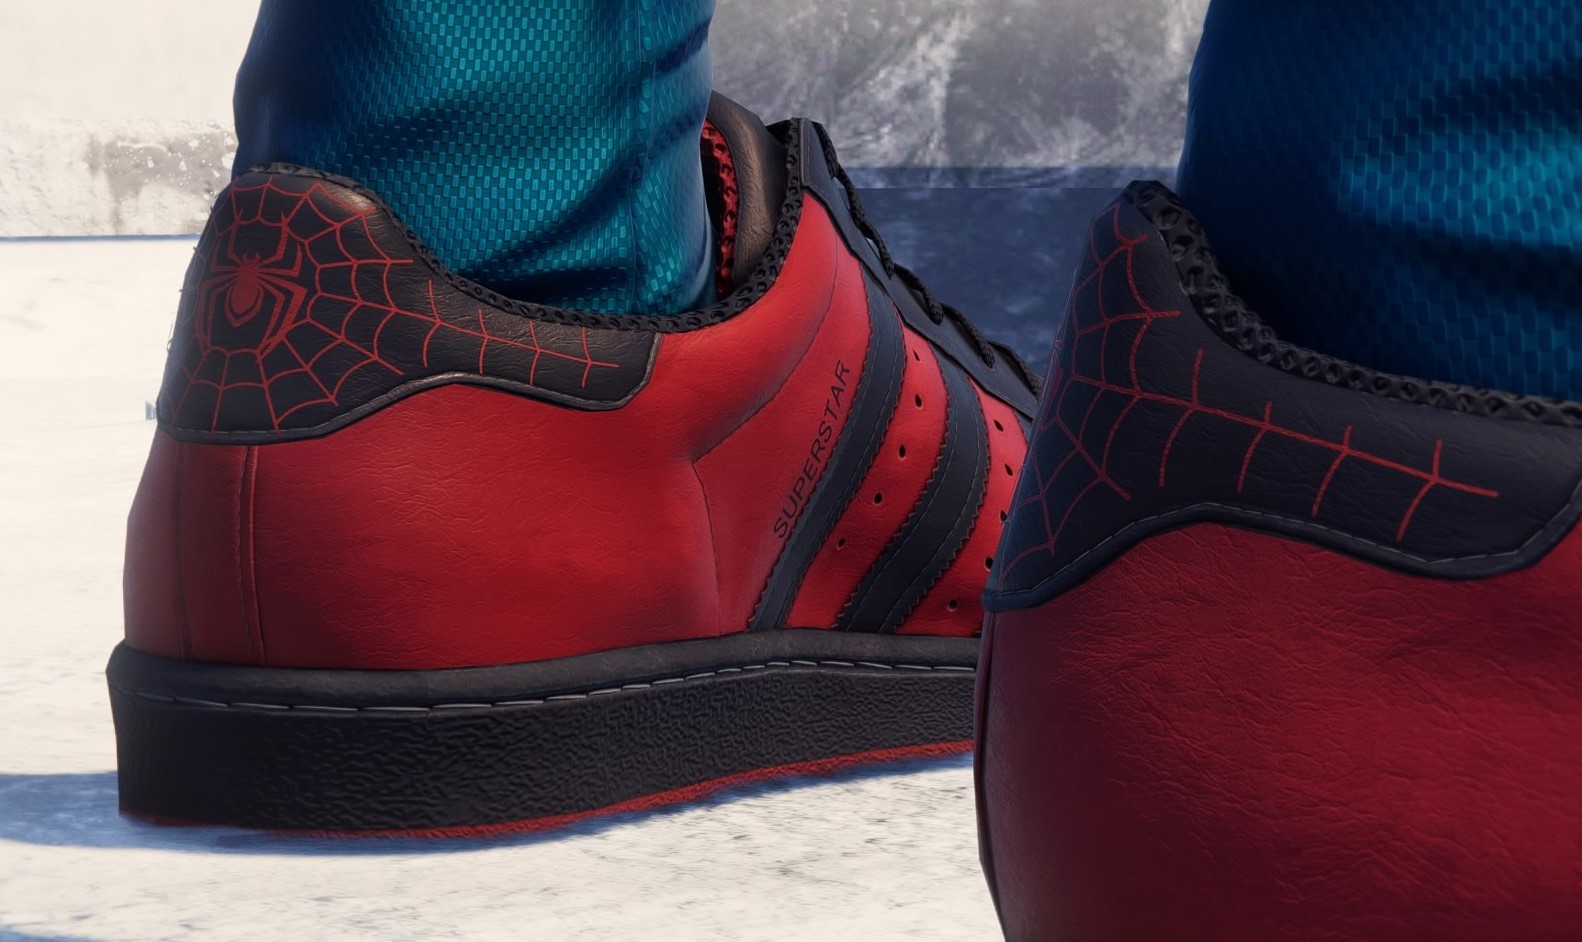 Escándalo avance pedir disculpas PlayStation teams up with Adidas for 'Spider-Man: Miles Morales' Superstar